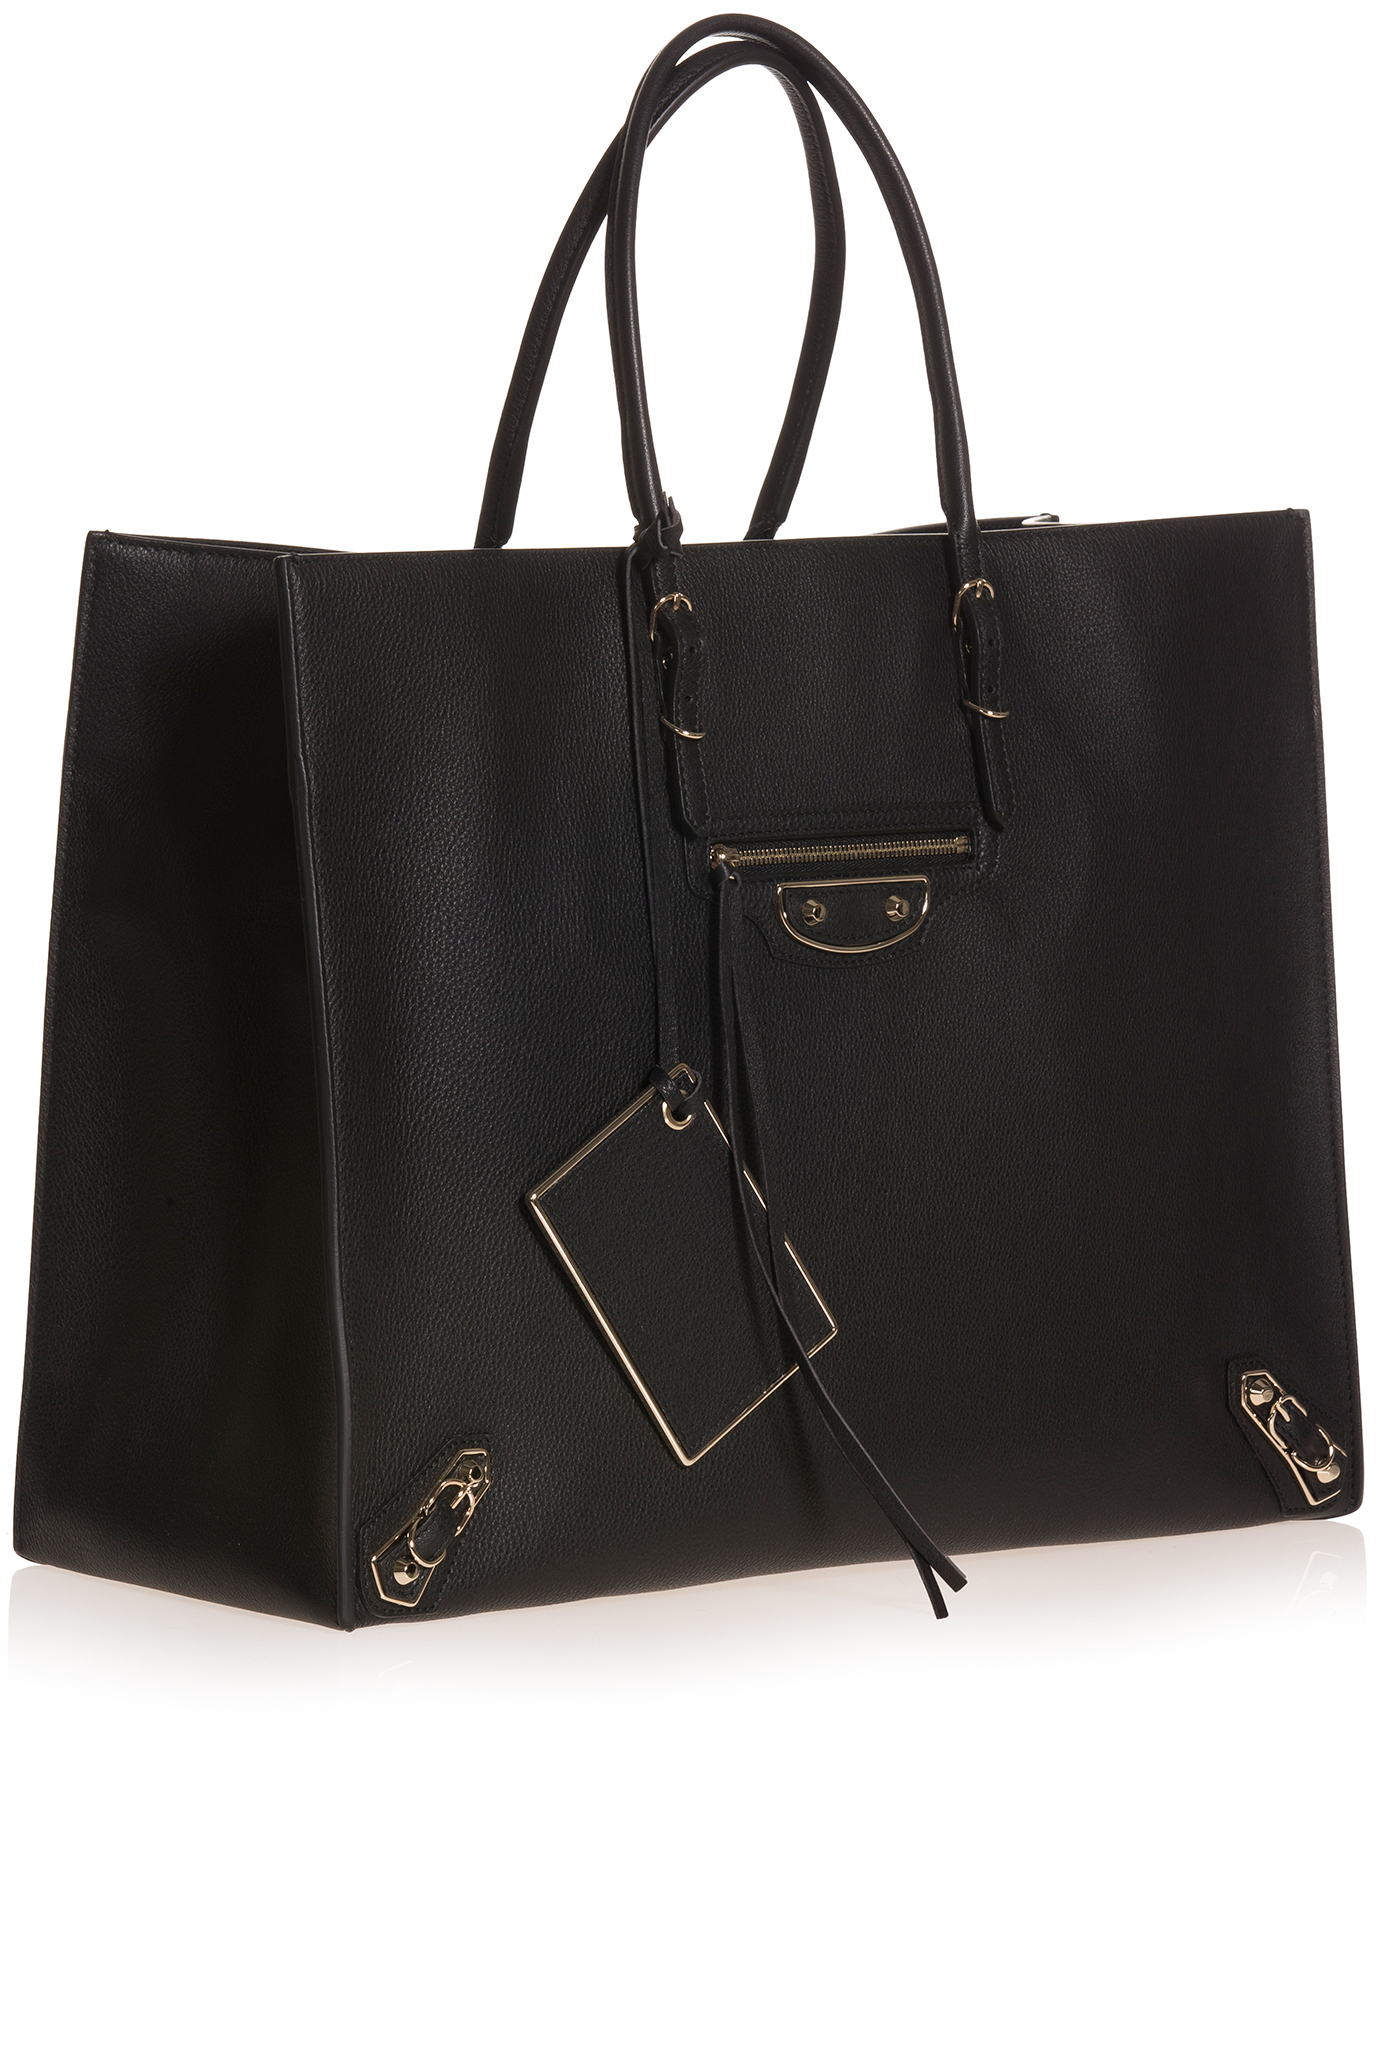 Balenciaga Papier A4 Large Shopper Bag in Black | Lyst